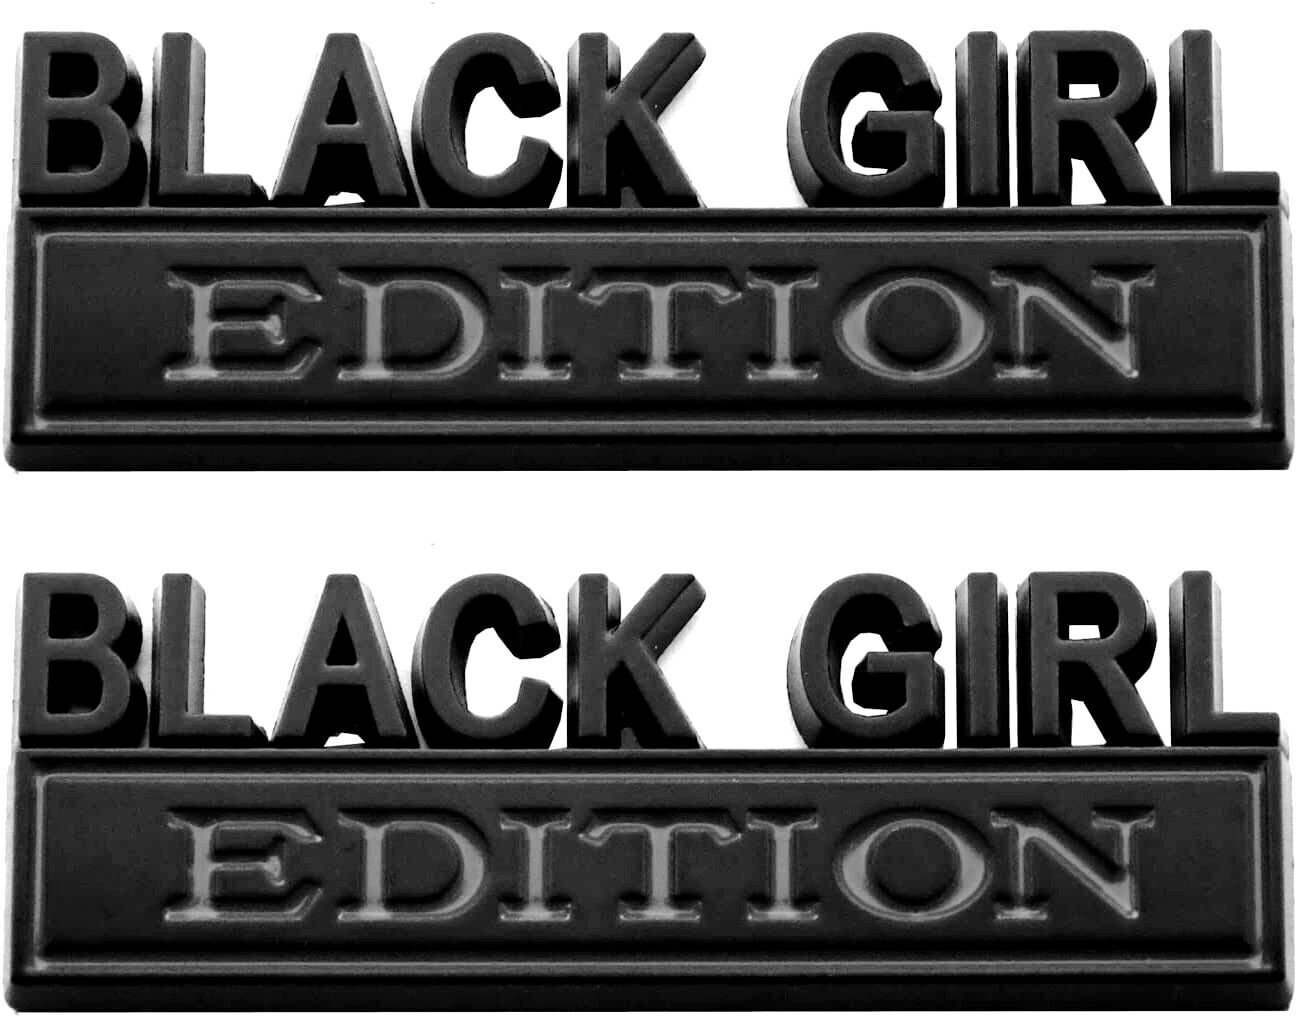 2x OEM Black Girl Edition Emblem Badge fits F series Silverado SUV Truck Black